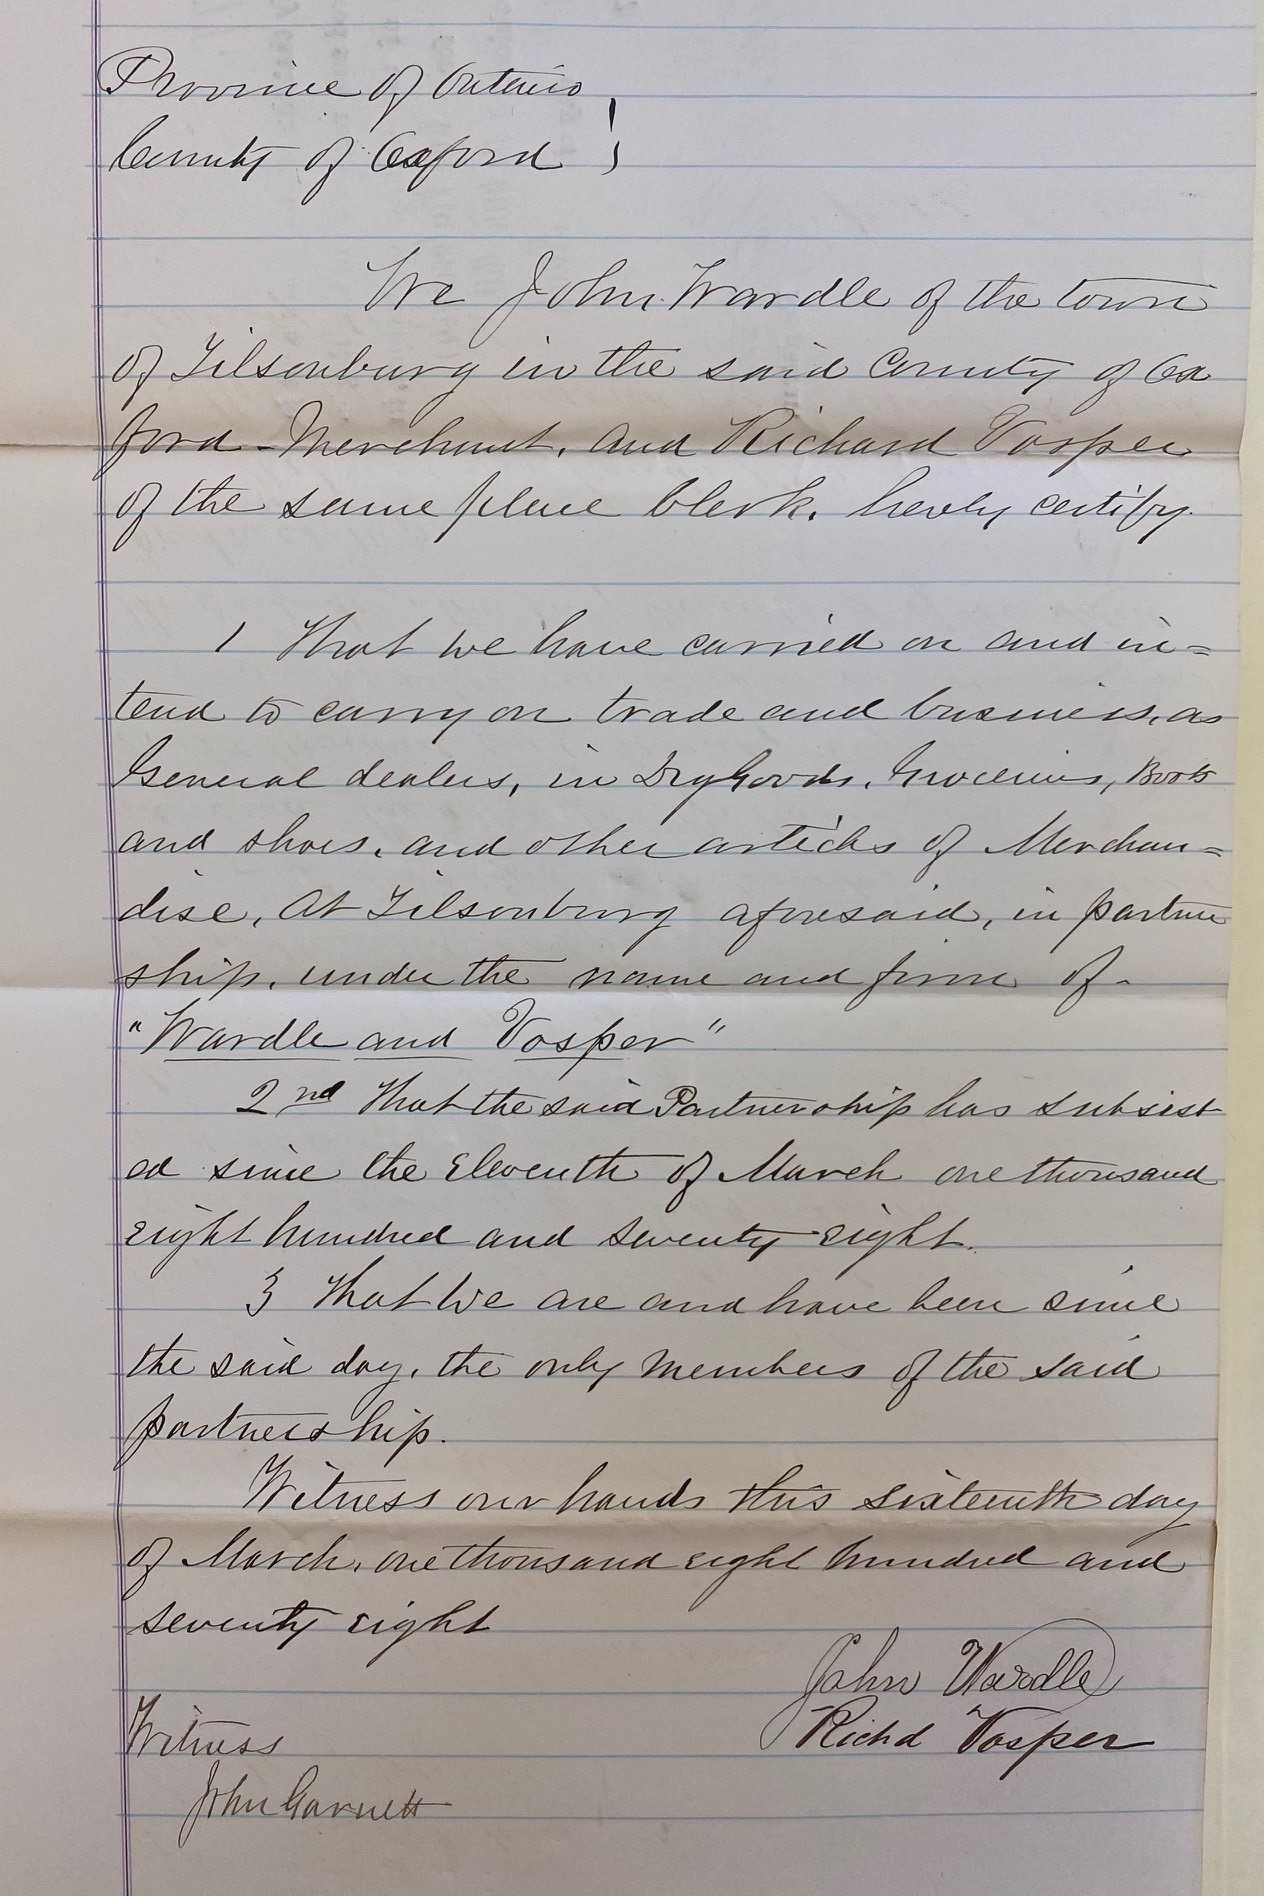 Handwritten declaration of partnership for Wardle & Vosper of Tillsonburg. Signed 1878.